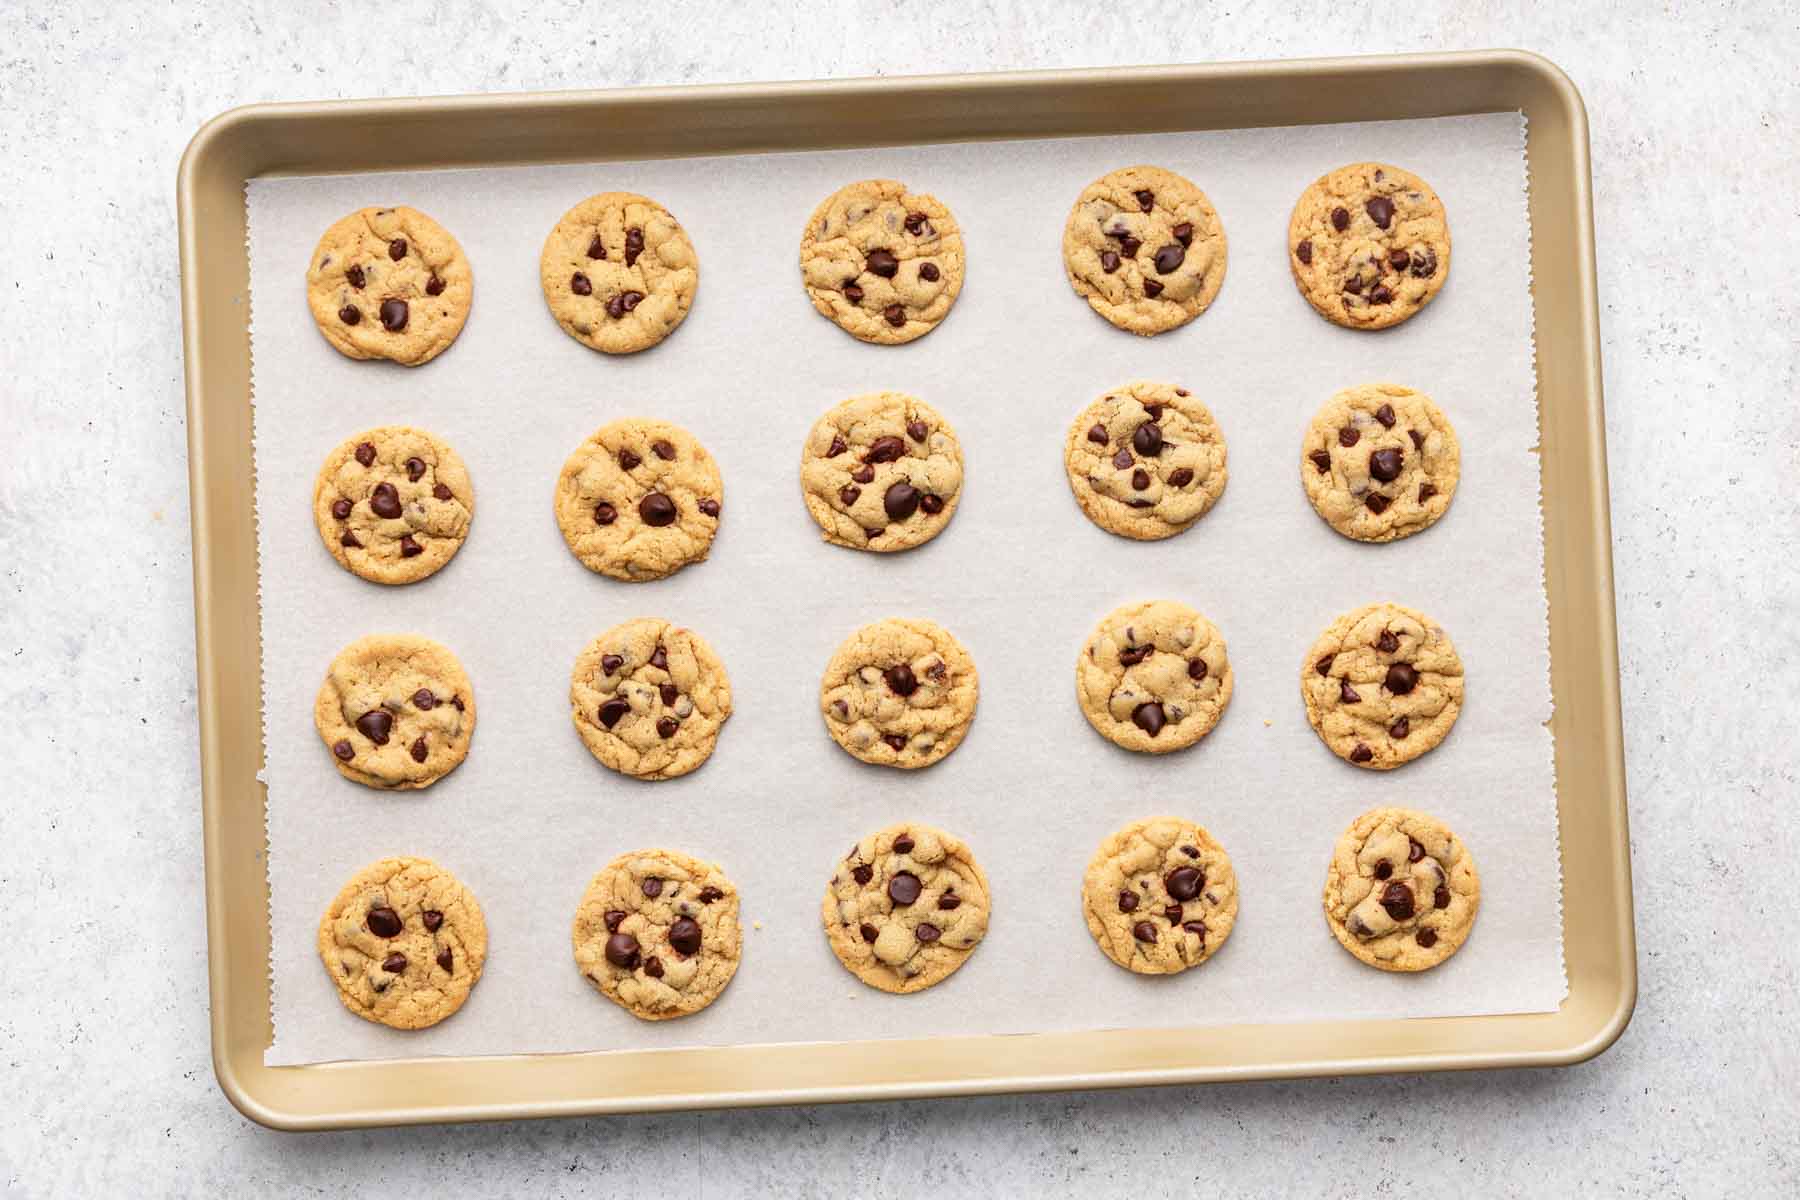 Twenty mini chocolate chip cookies freshly baked on a baking sheet.